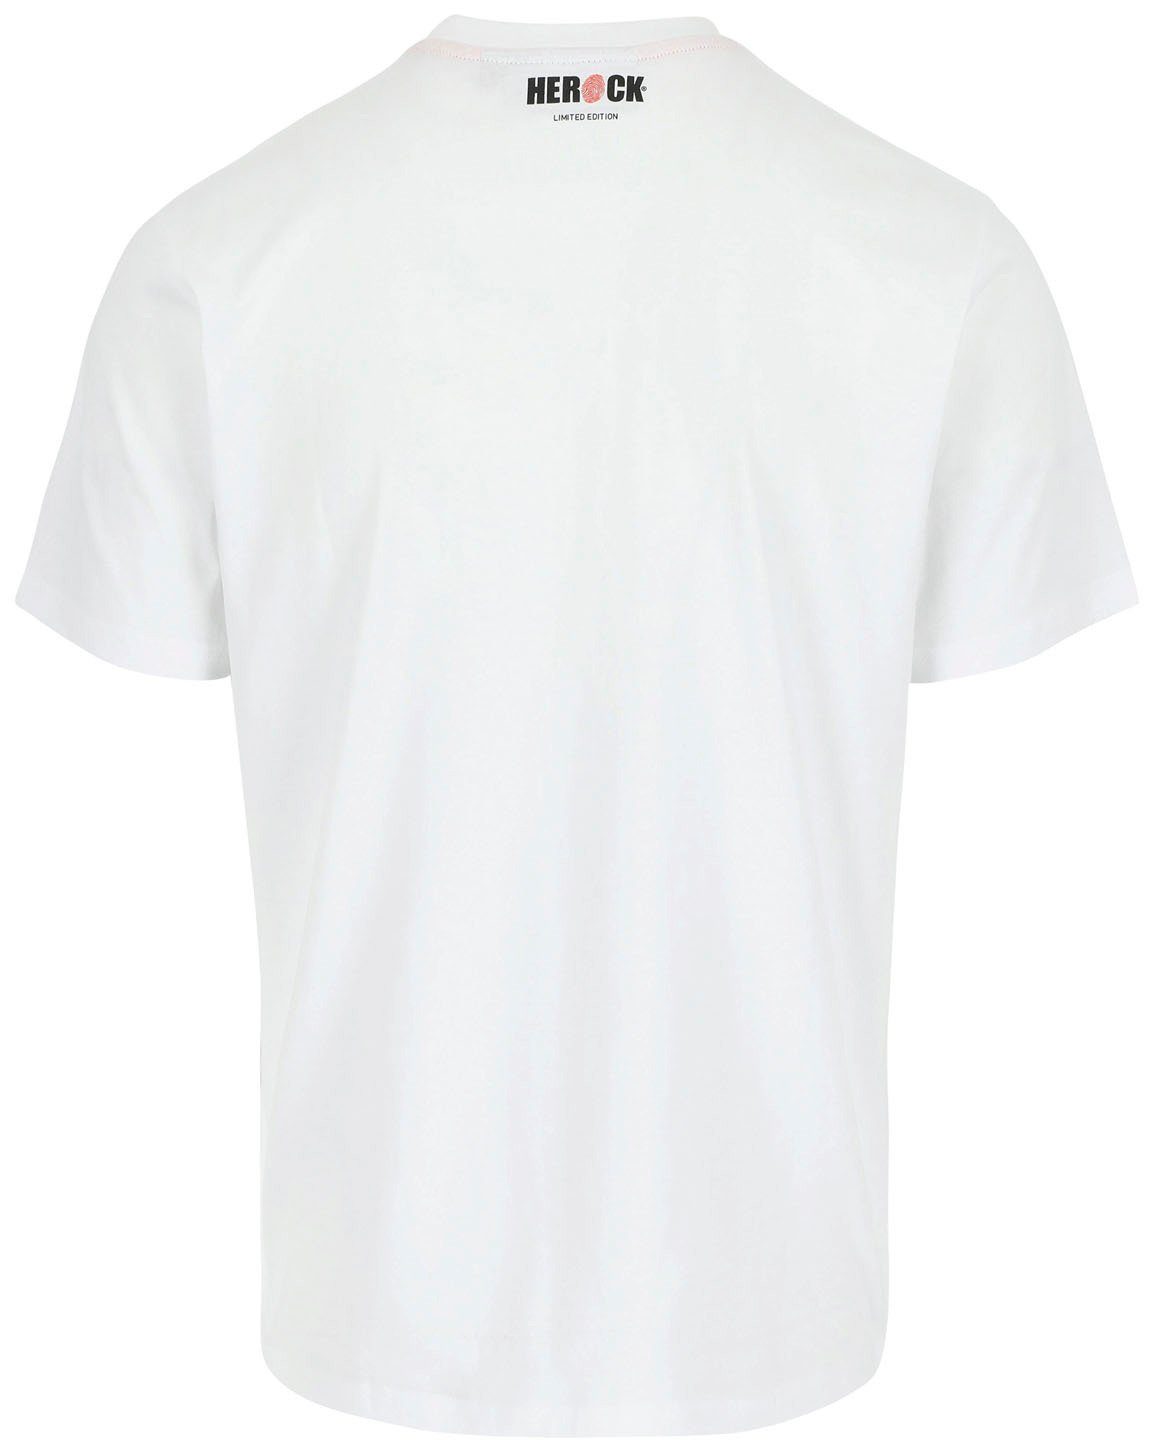 Edition Limited Skullo T-Shirt Herock